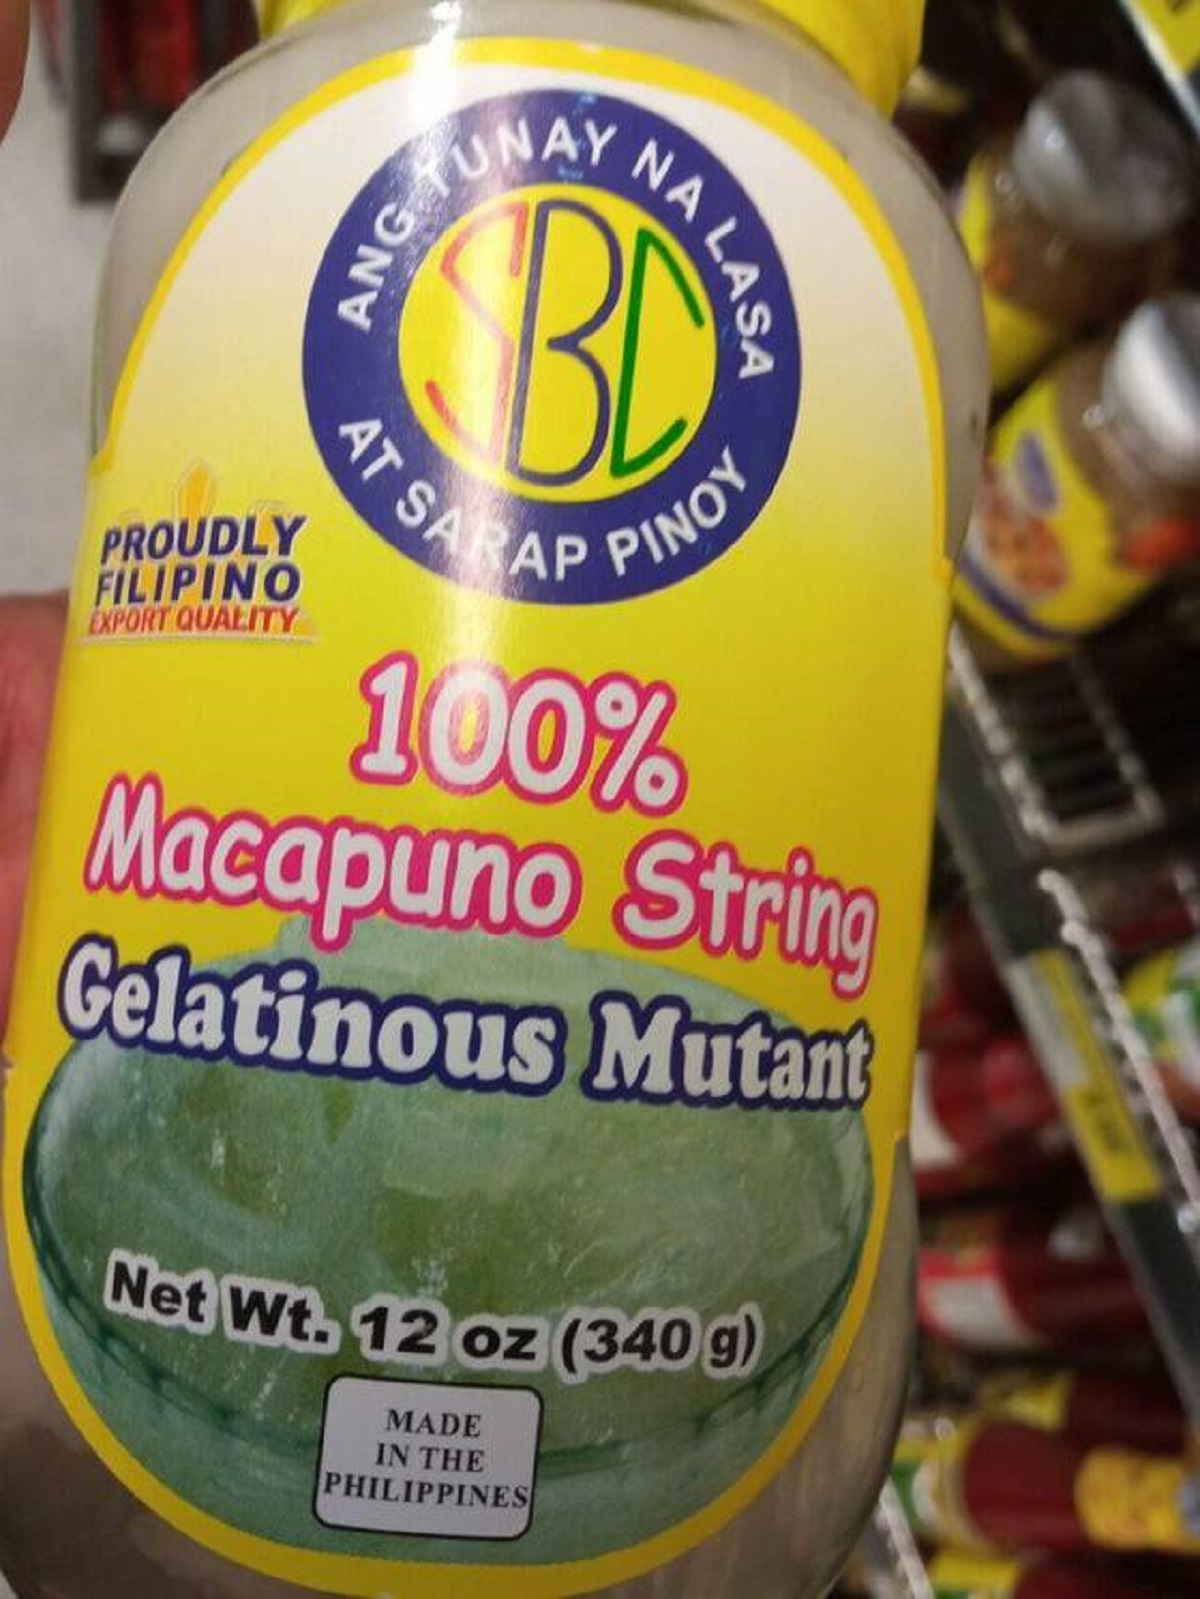 "My local Asian grocery sells jars of Gelatinous Mutant"